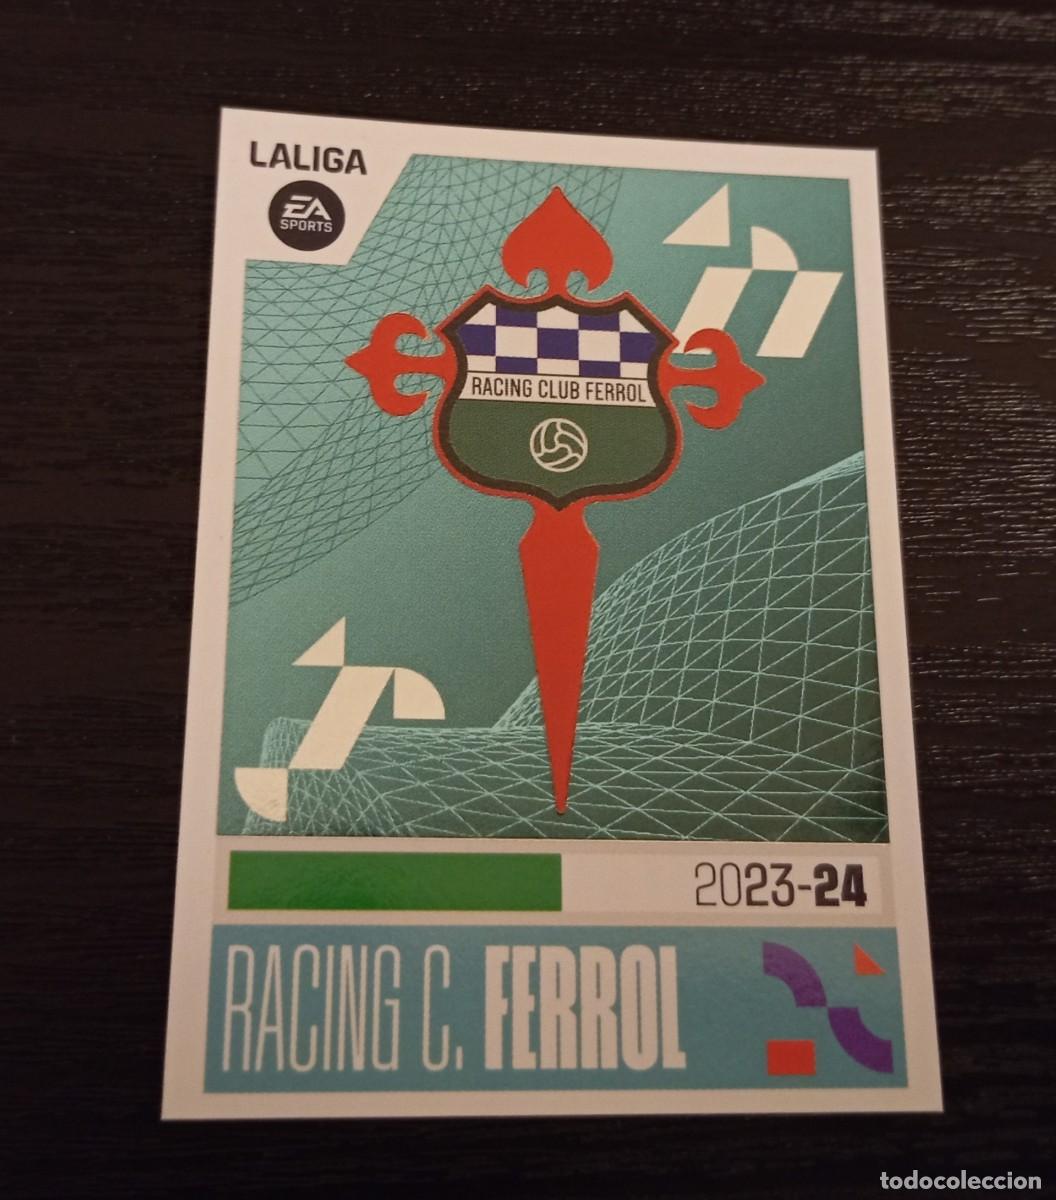 HLX Kits on X: Racing Club de Ferrol, 23-24